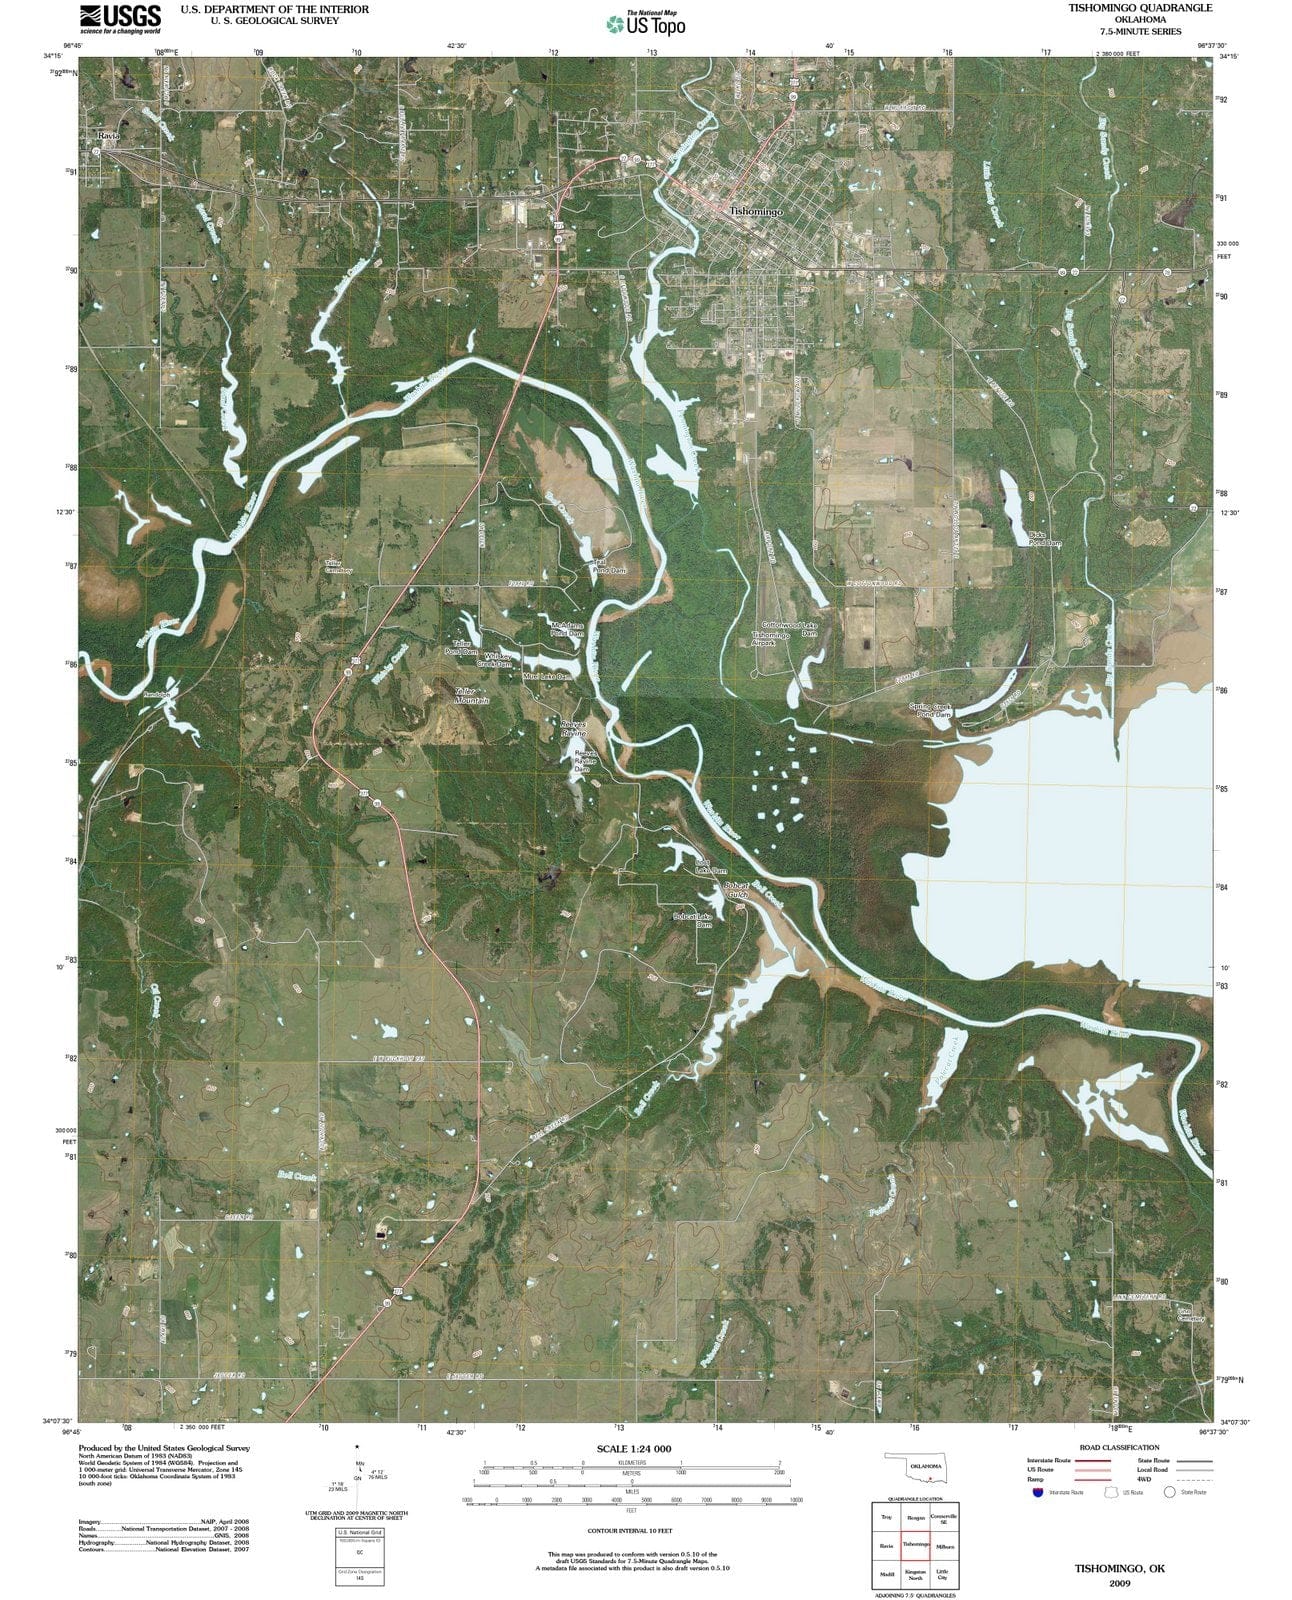 2009 Tishomingo, OK - Oklahoma - USGS Topographic Map